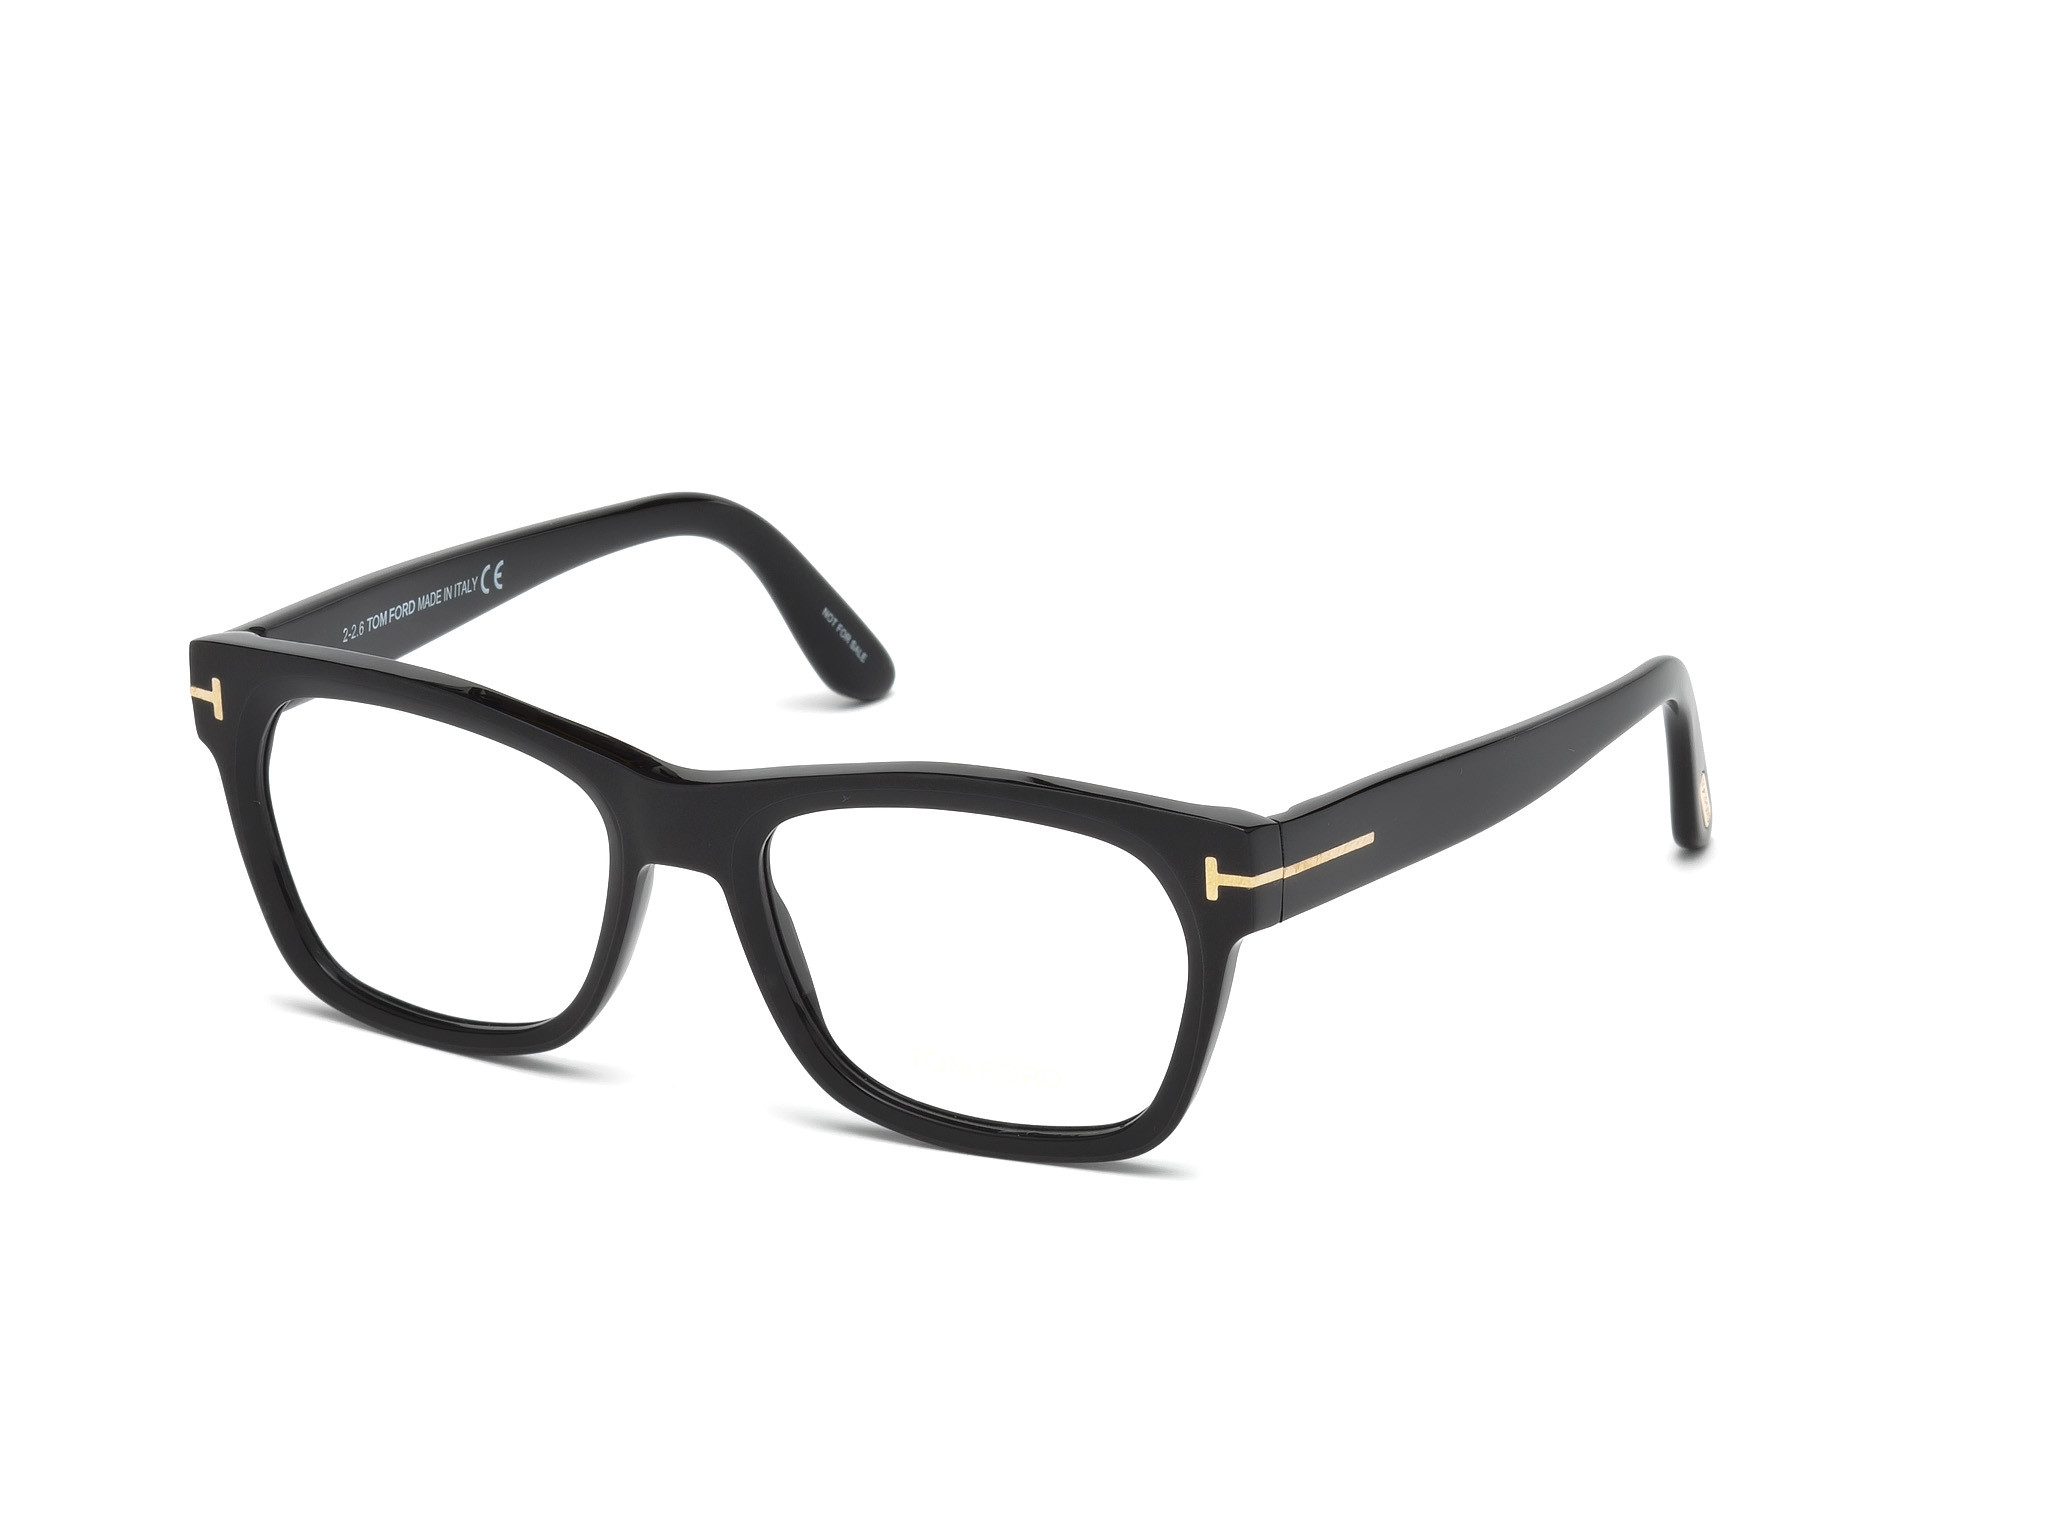 Shop Glasses Online - Paradise Canyon Eye Care, St. George, UT